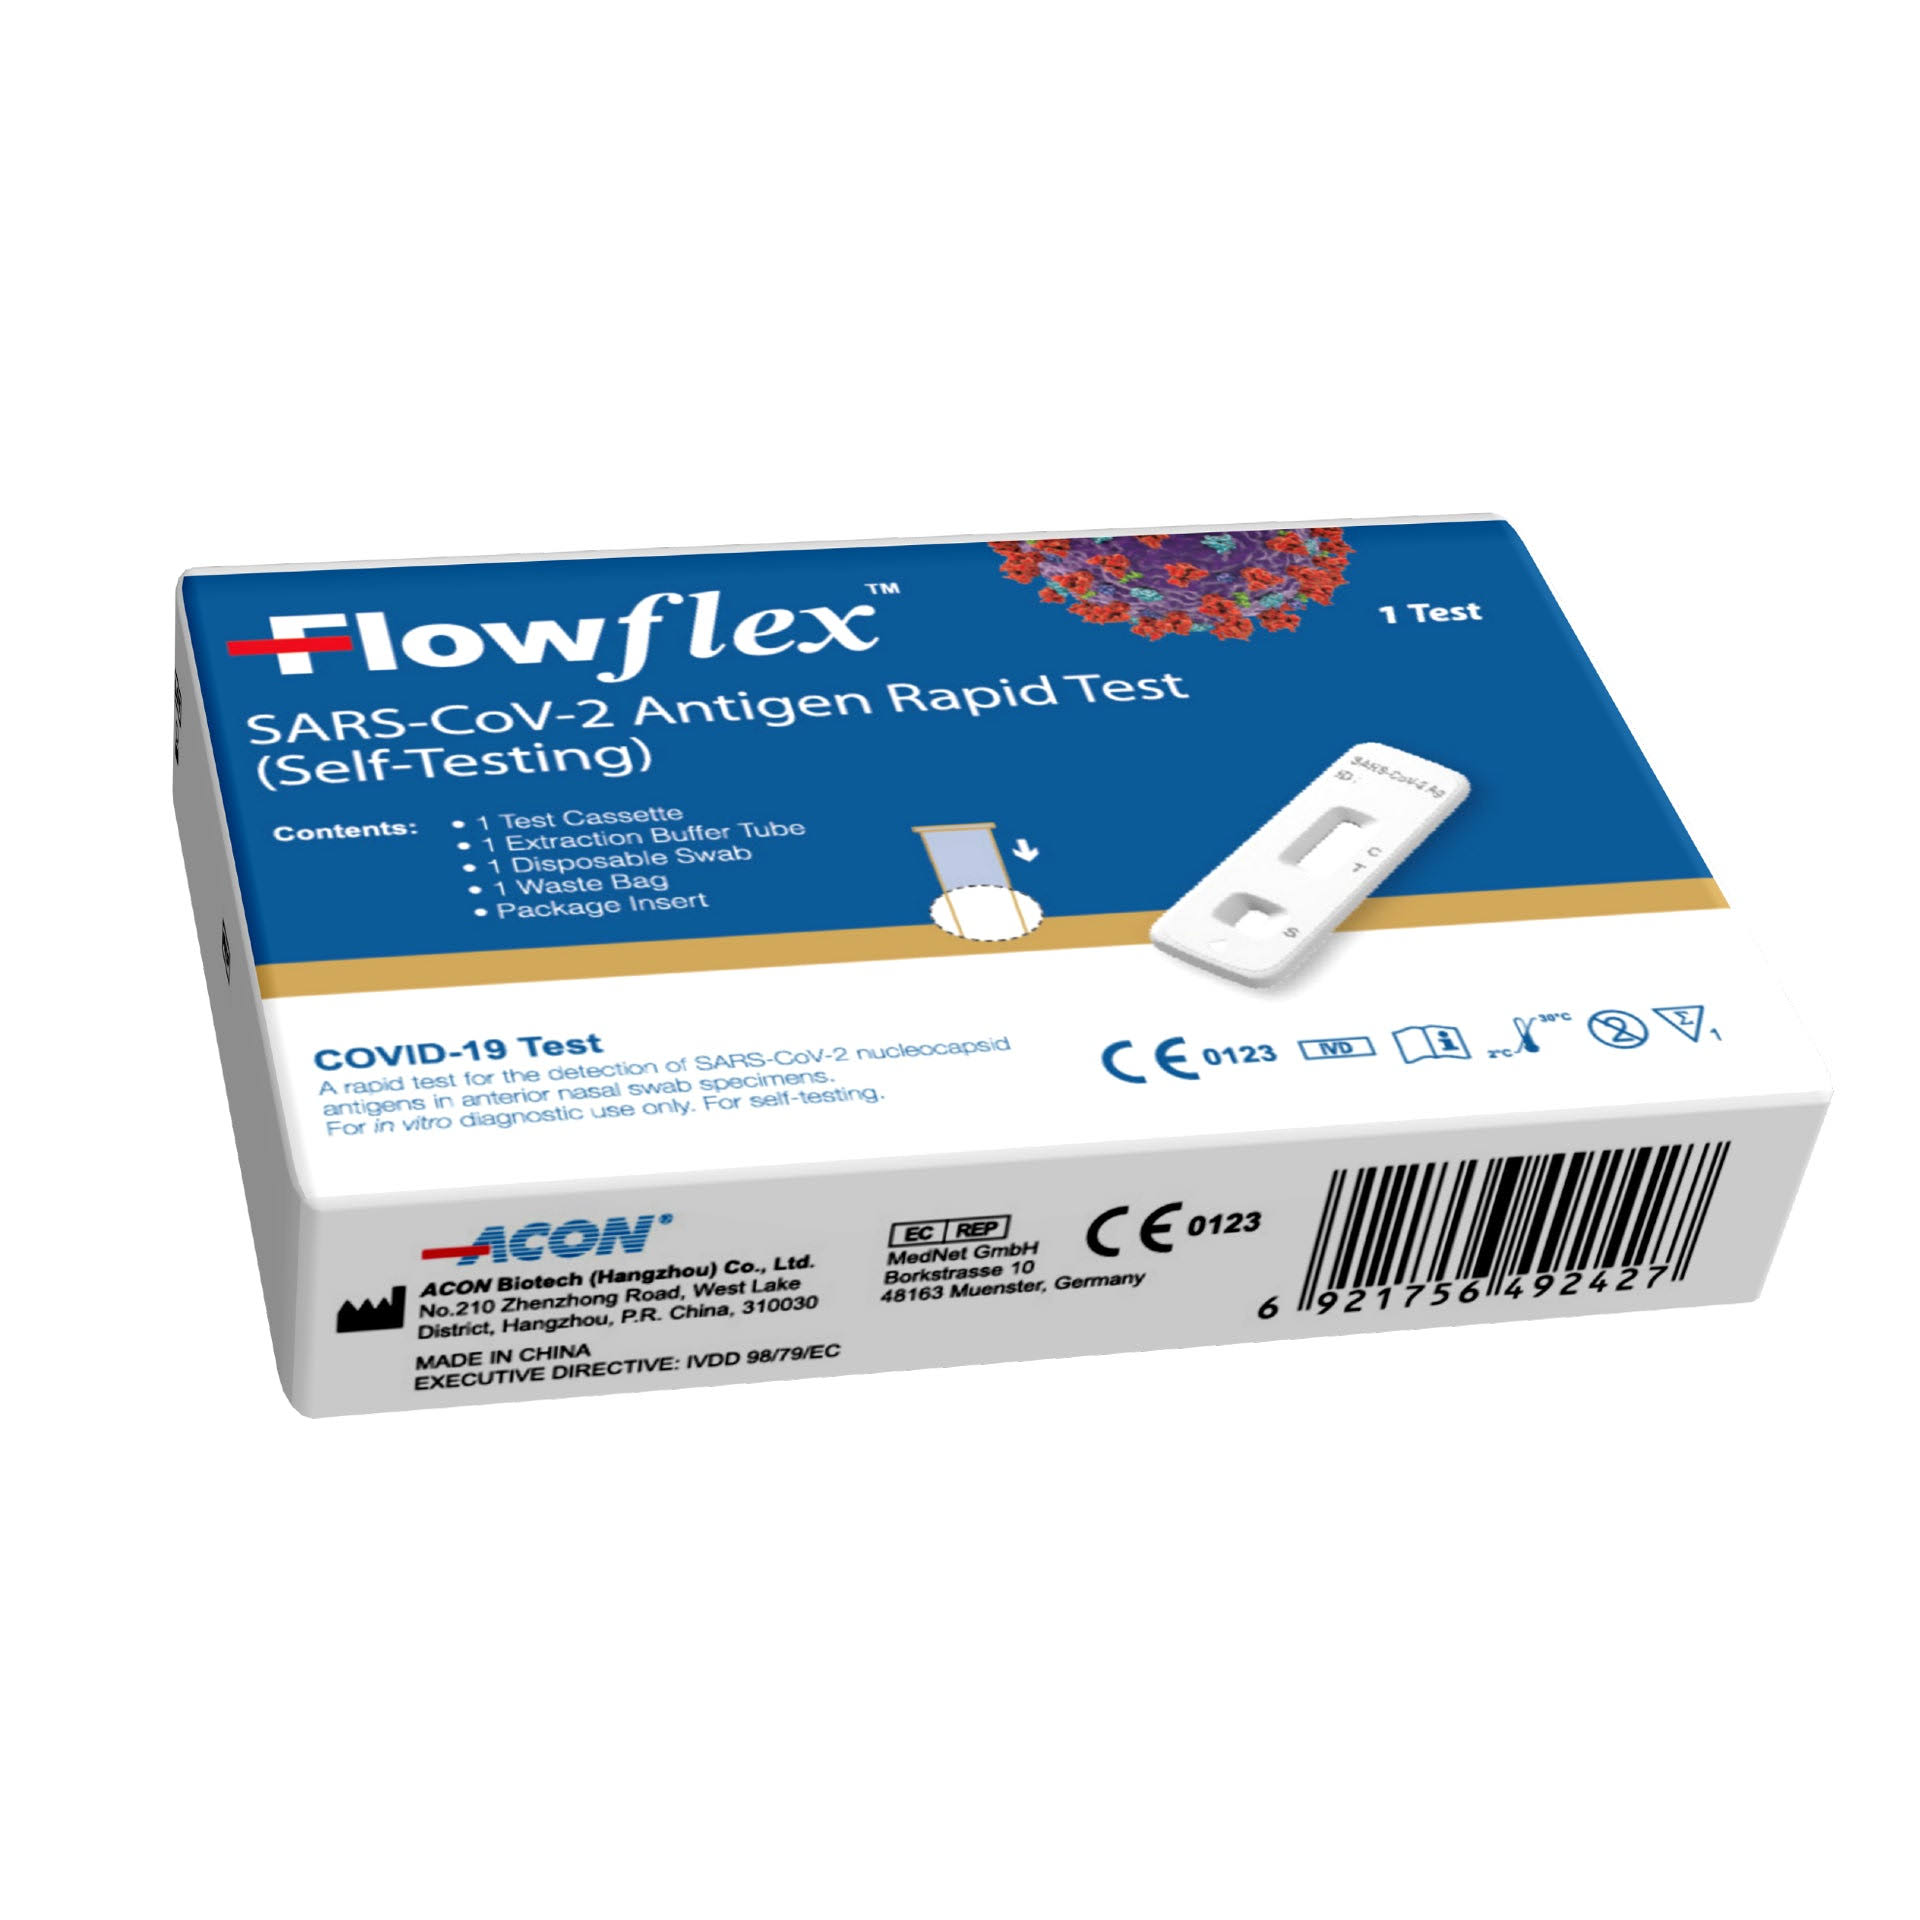 Flowflex Antigen Rapid Test